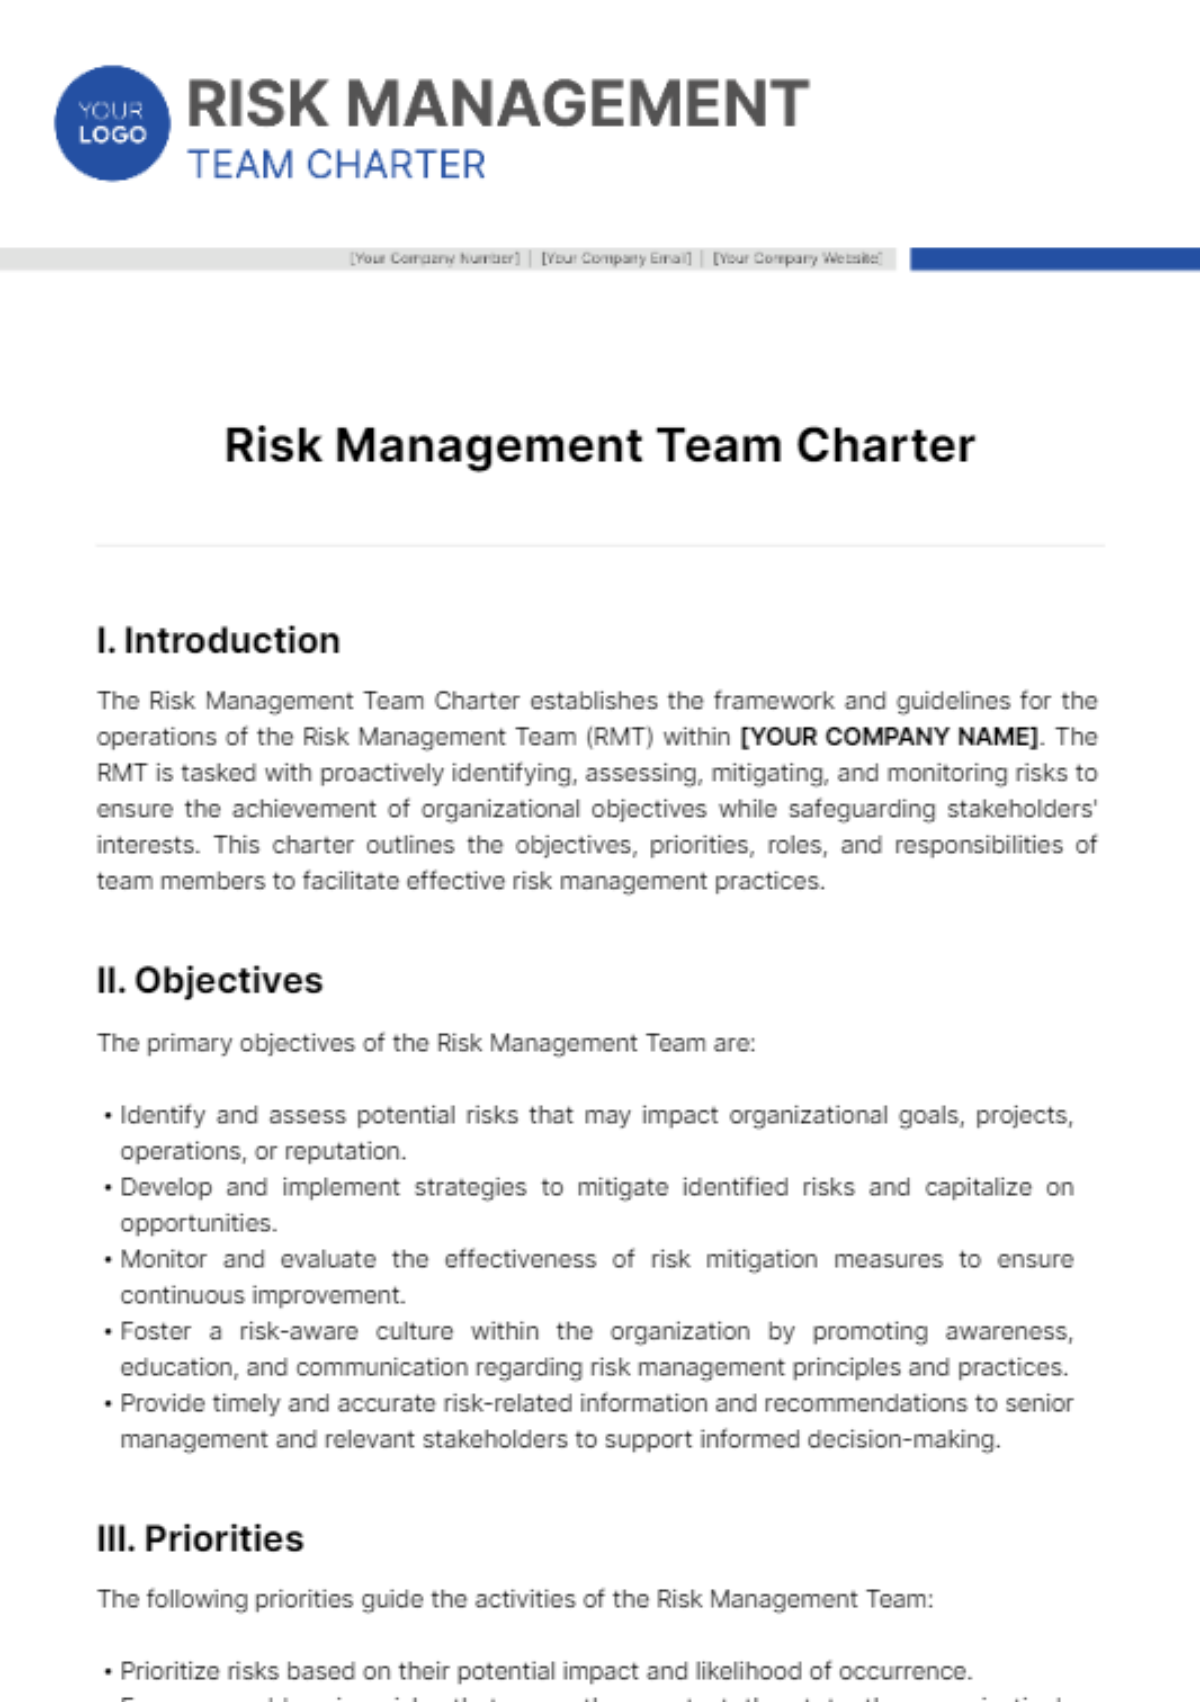 Free Risk Management Team Charter Template